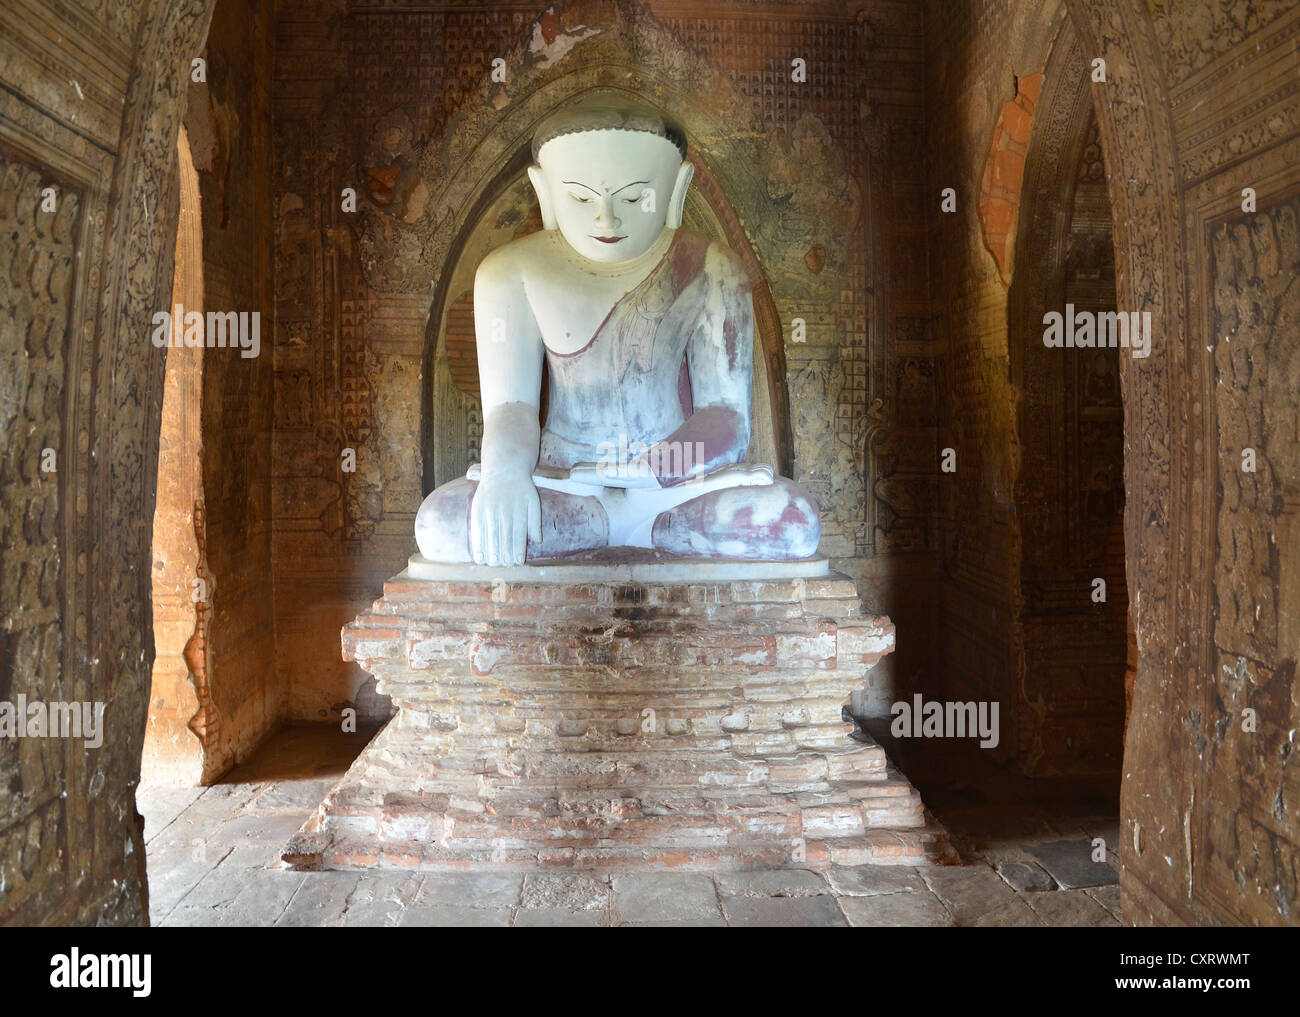 Seduto statua del Buddha, Old Bagan, Bagan, pagano, Myanmar, Birmania, Asia Foto Stock